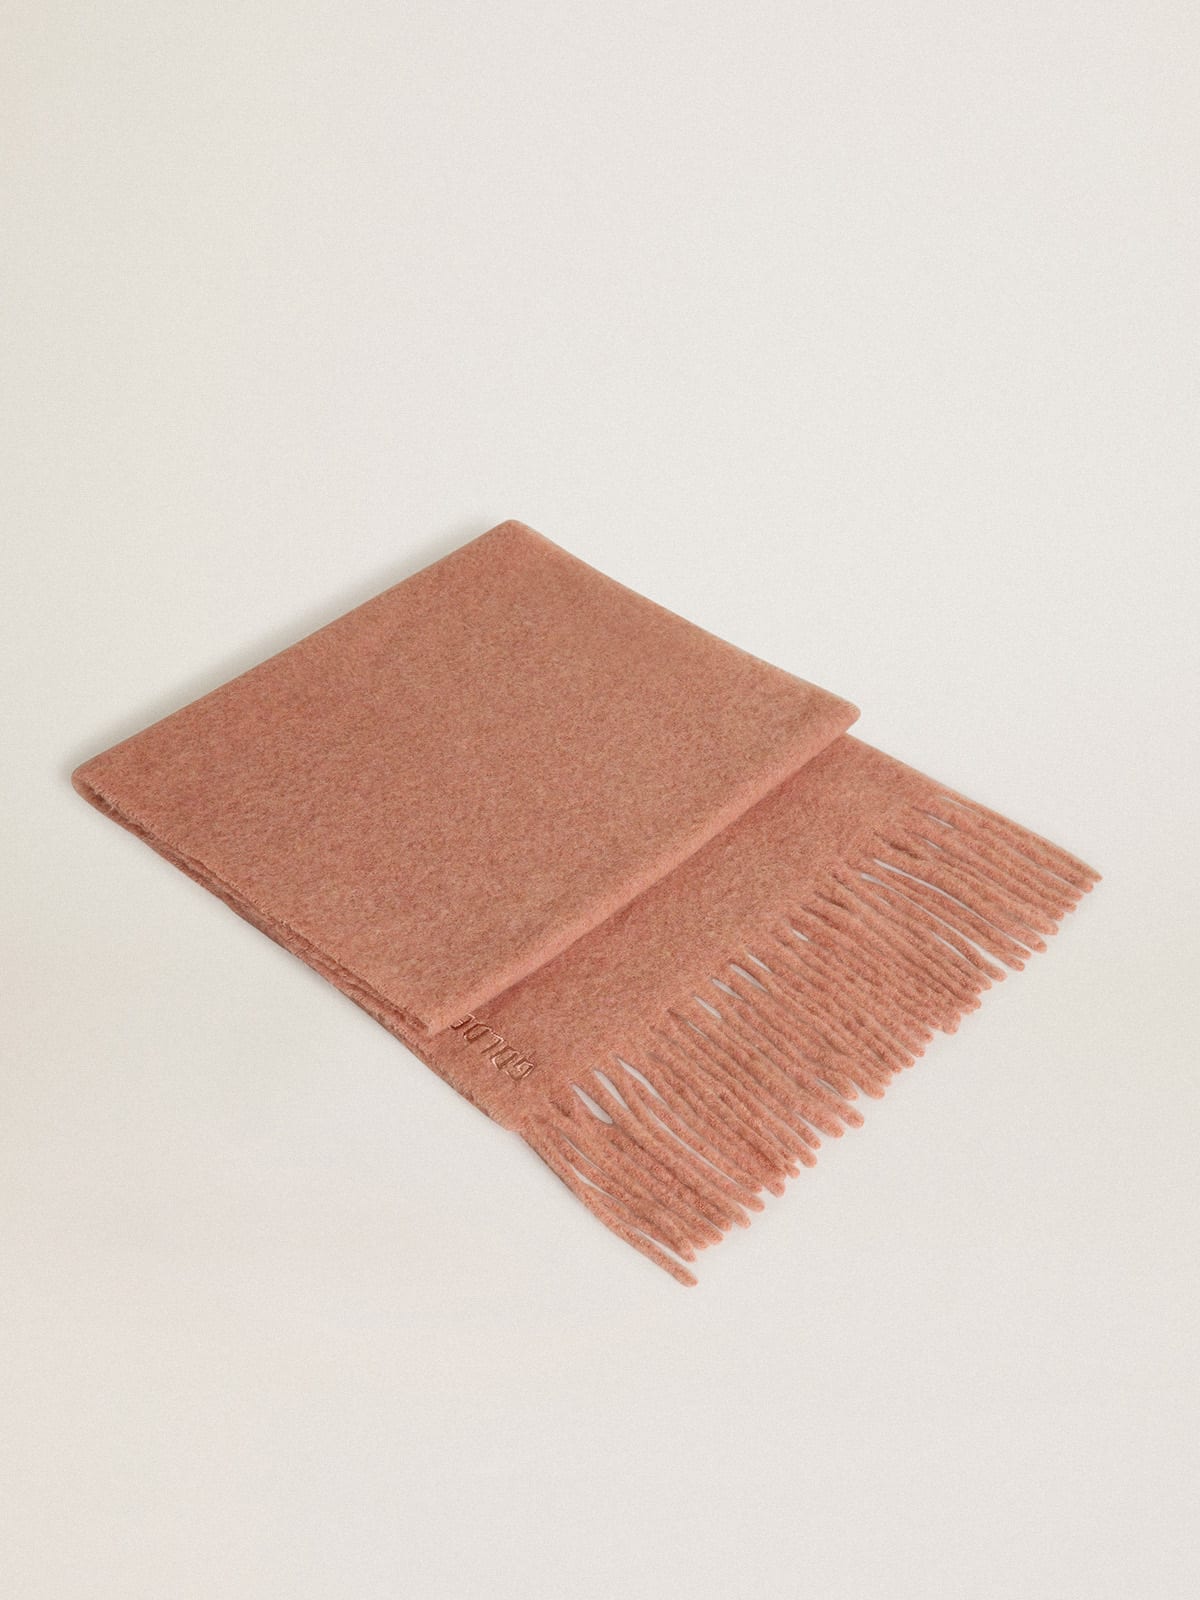 Golden Goose - Sciarpa in lana rosa cipria con frange e scritta Golden ton sur ton in 